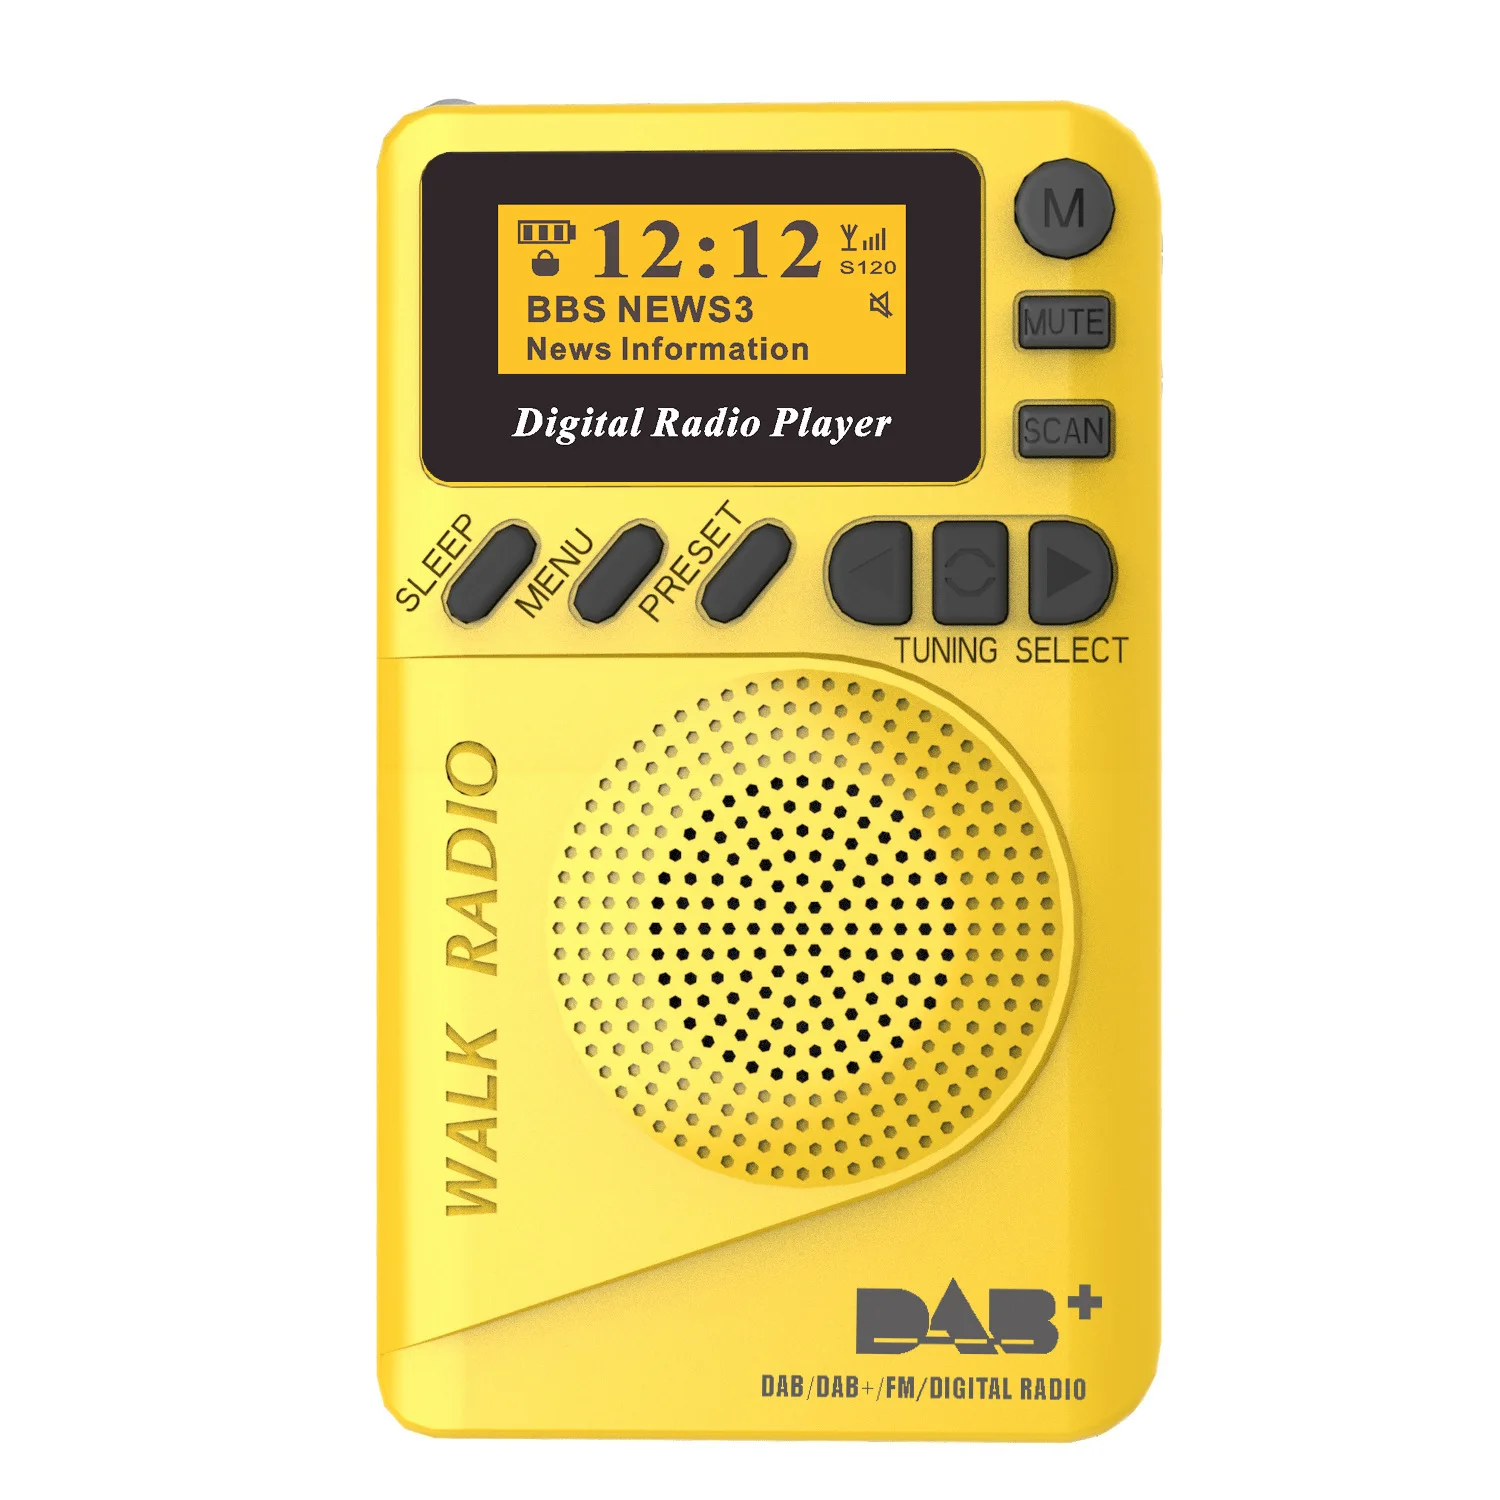 Portable Mini Radio Receiver Pocket DAB/DAB+ Digital Radio FM LCD Display Good Sound Speaker Long Battery Life